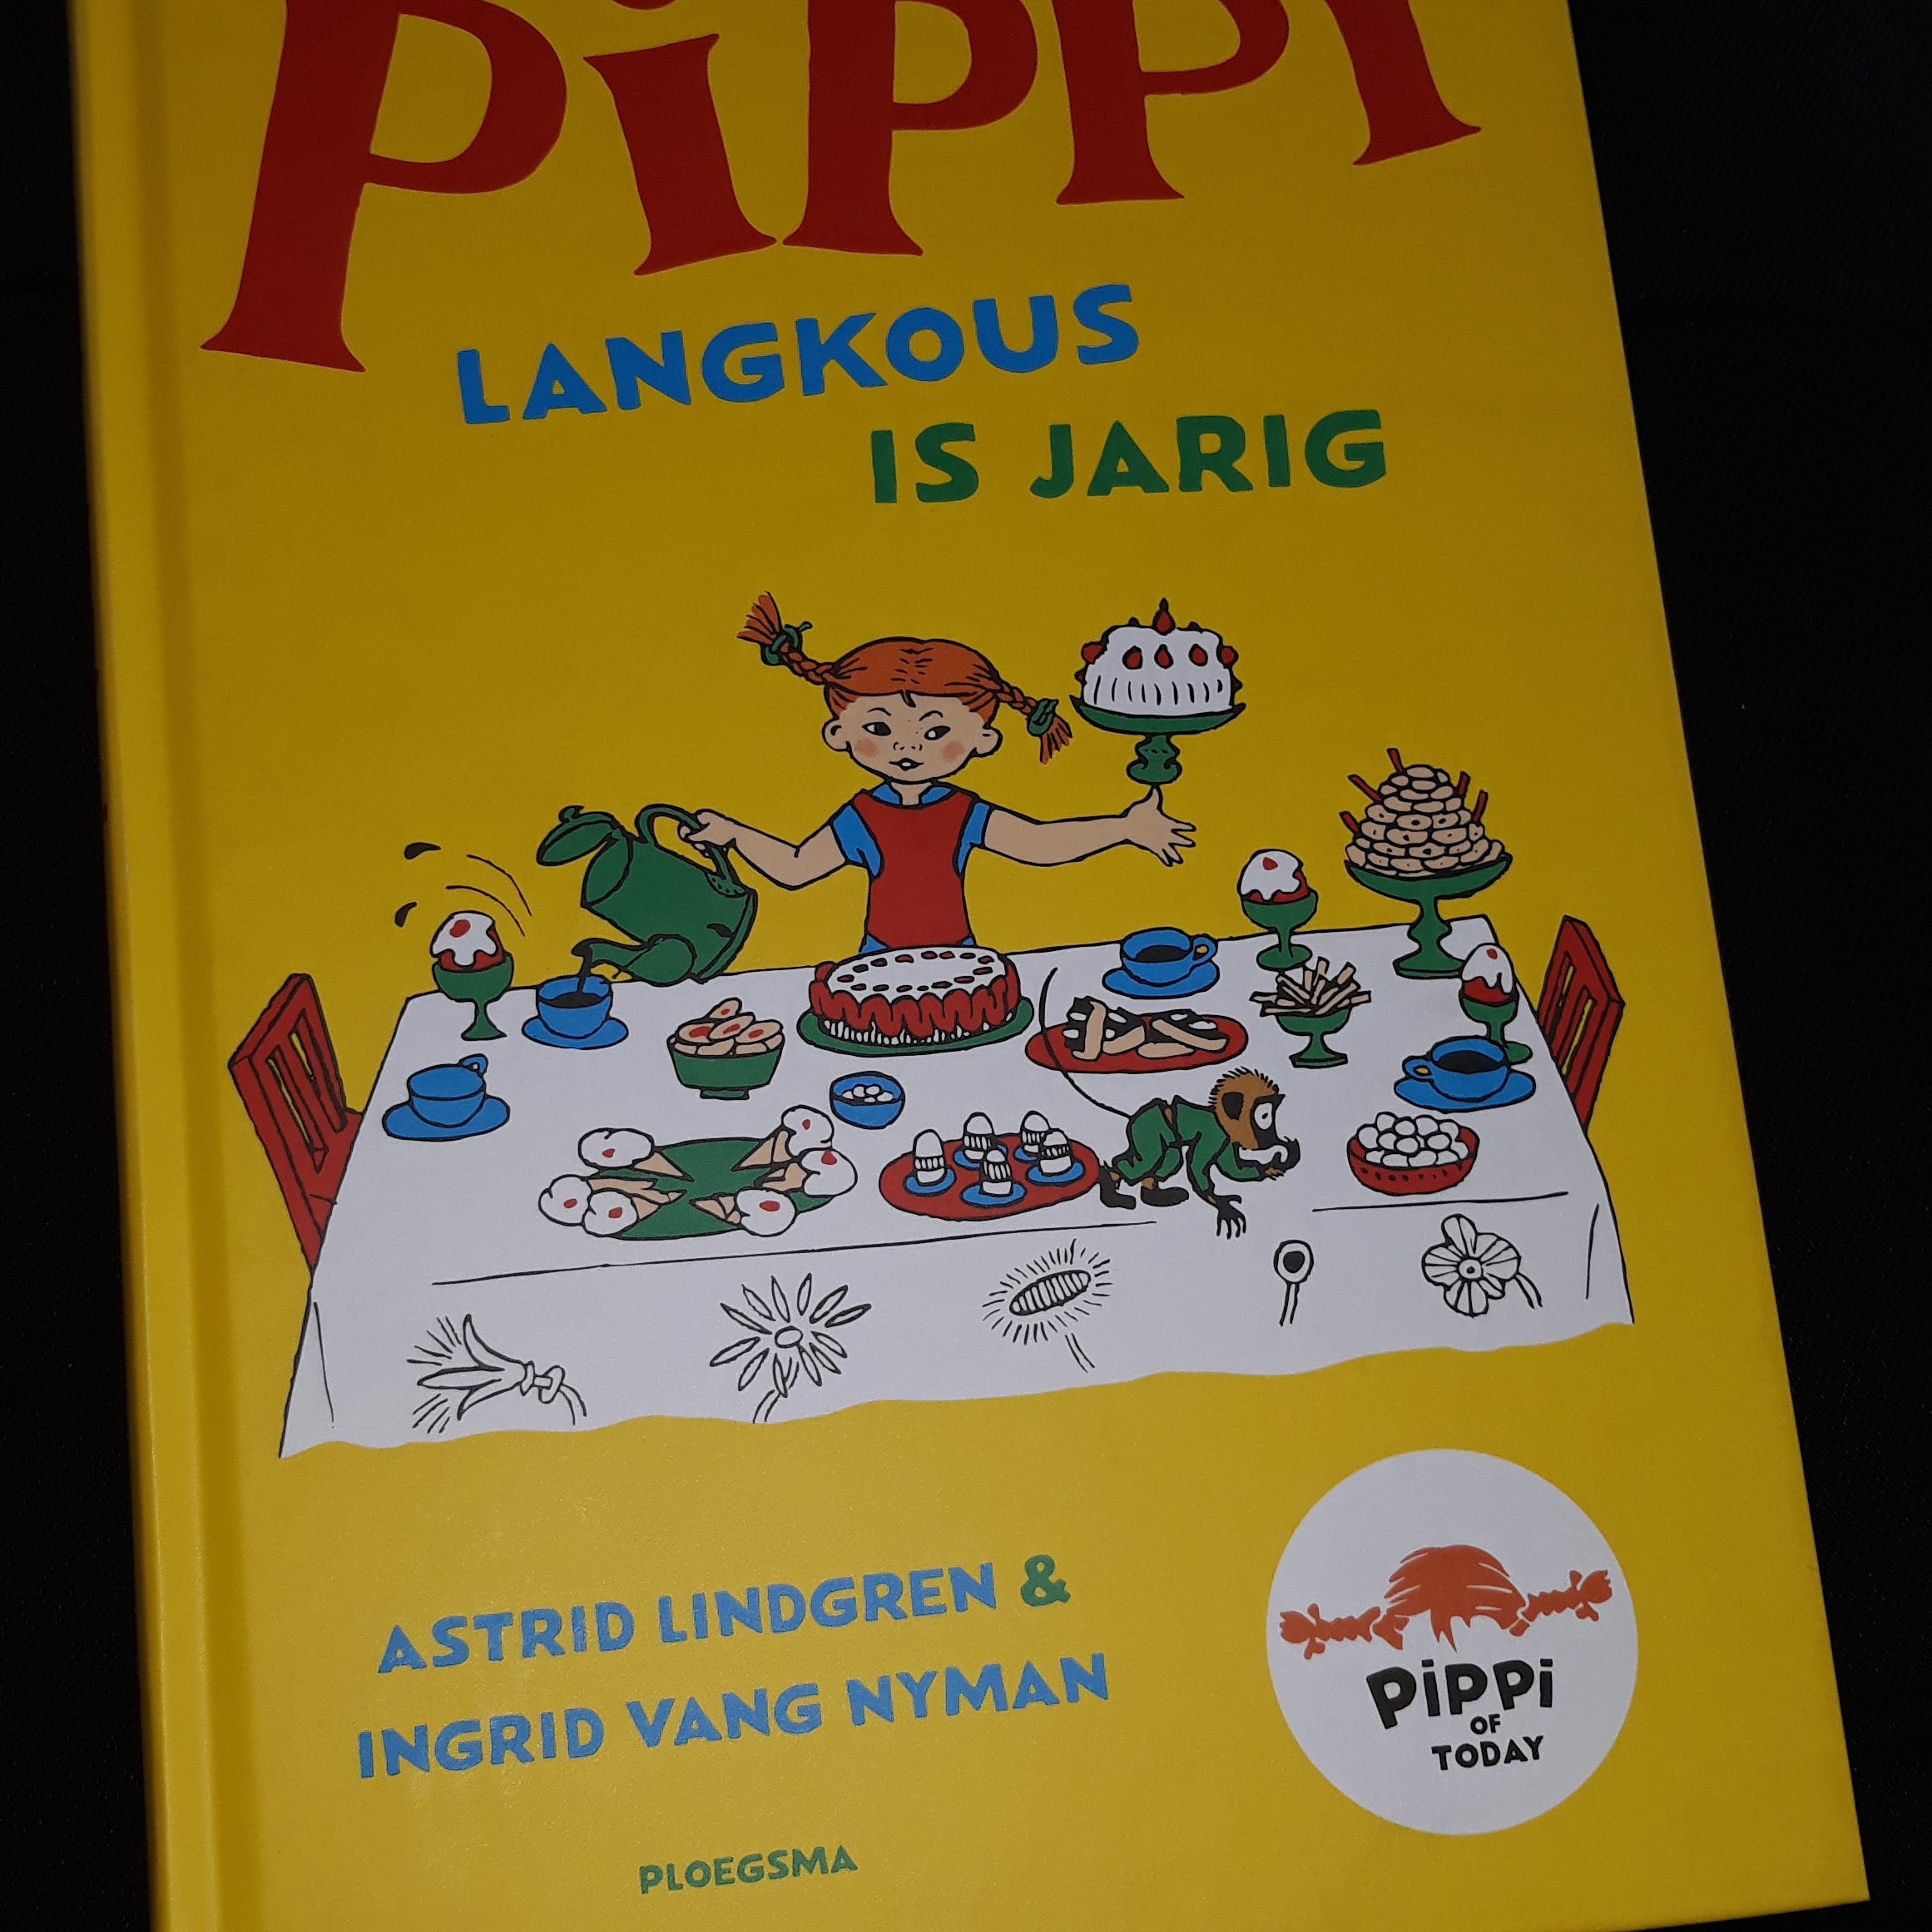 ‘Pippi Langkous is jarig’ met actie Pippi of Today